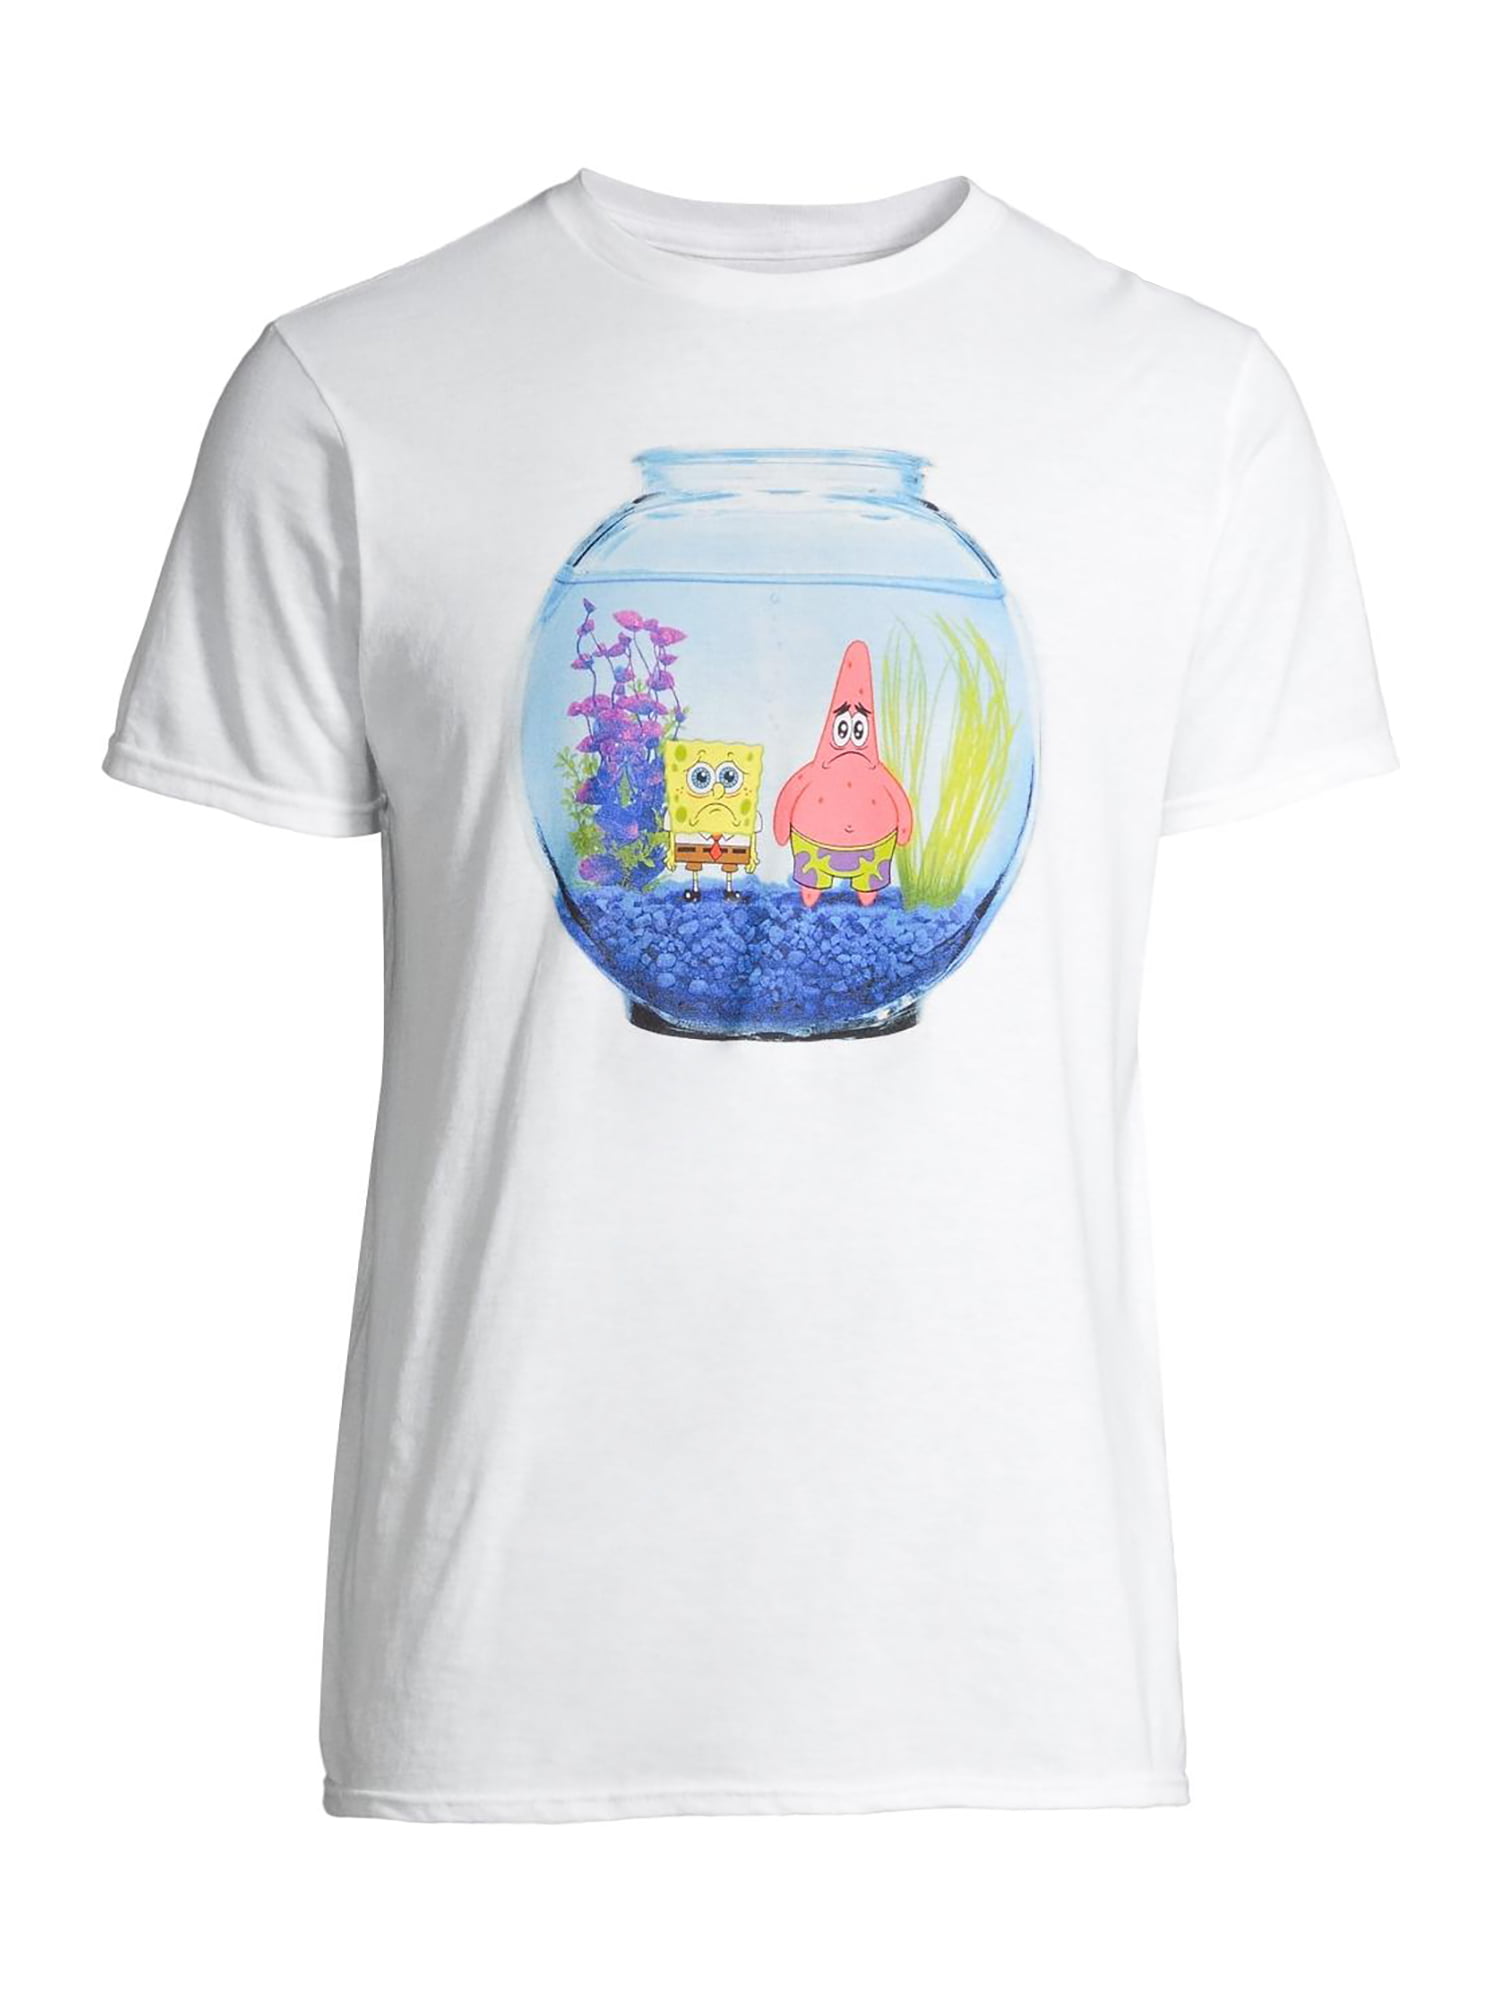 SpongeBob SquarePants T-Shirt Sad Patrick In Fish Bowl Small White